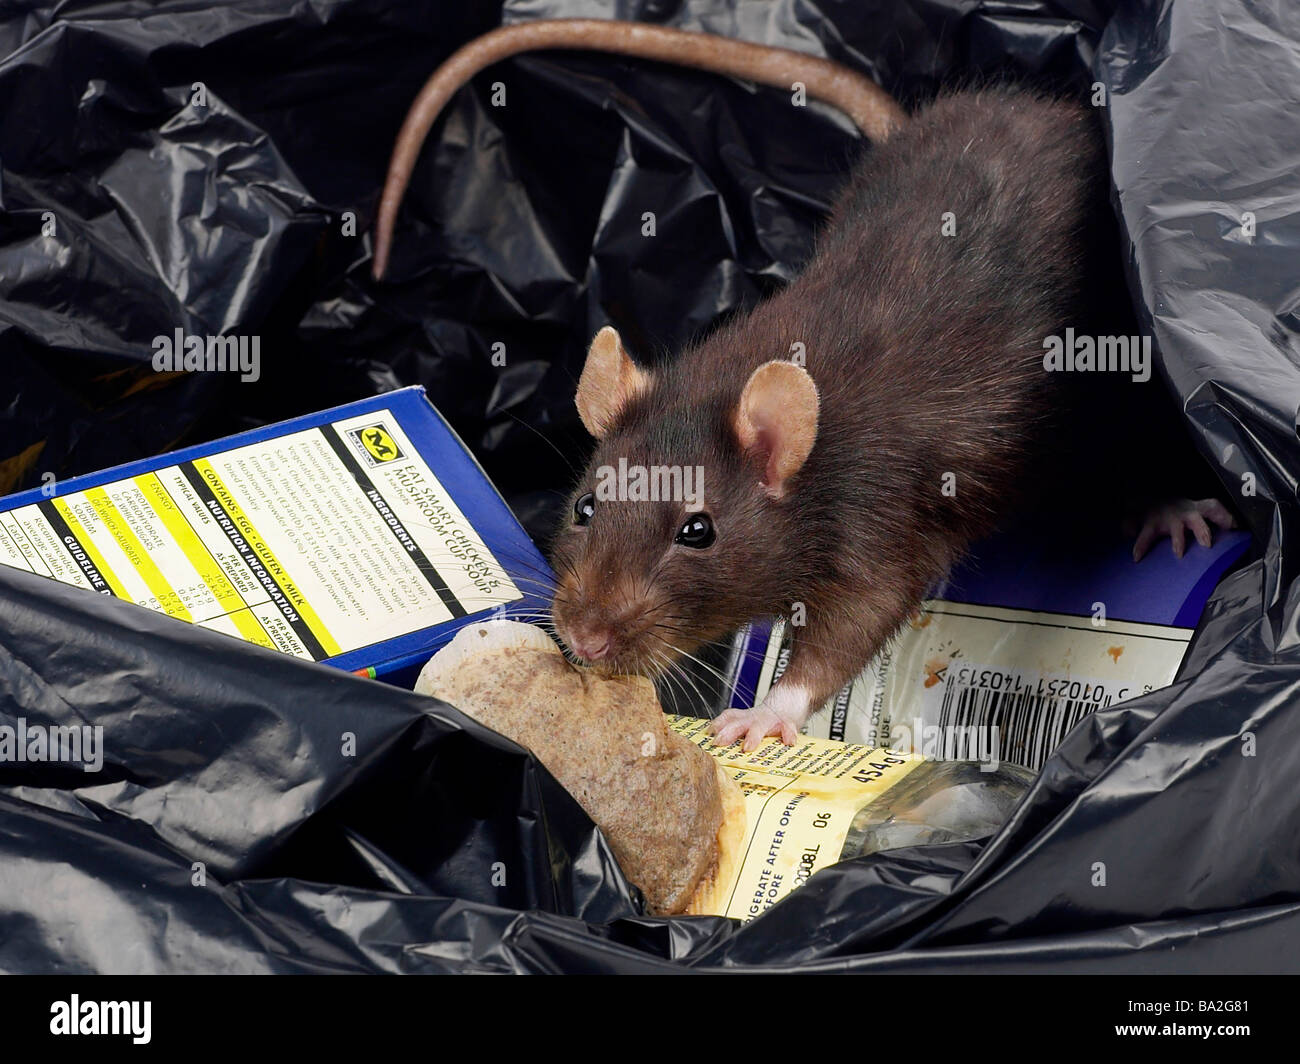 A brown rat around rubbish in a bin bag. Stock Photo